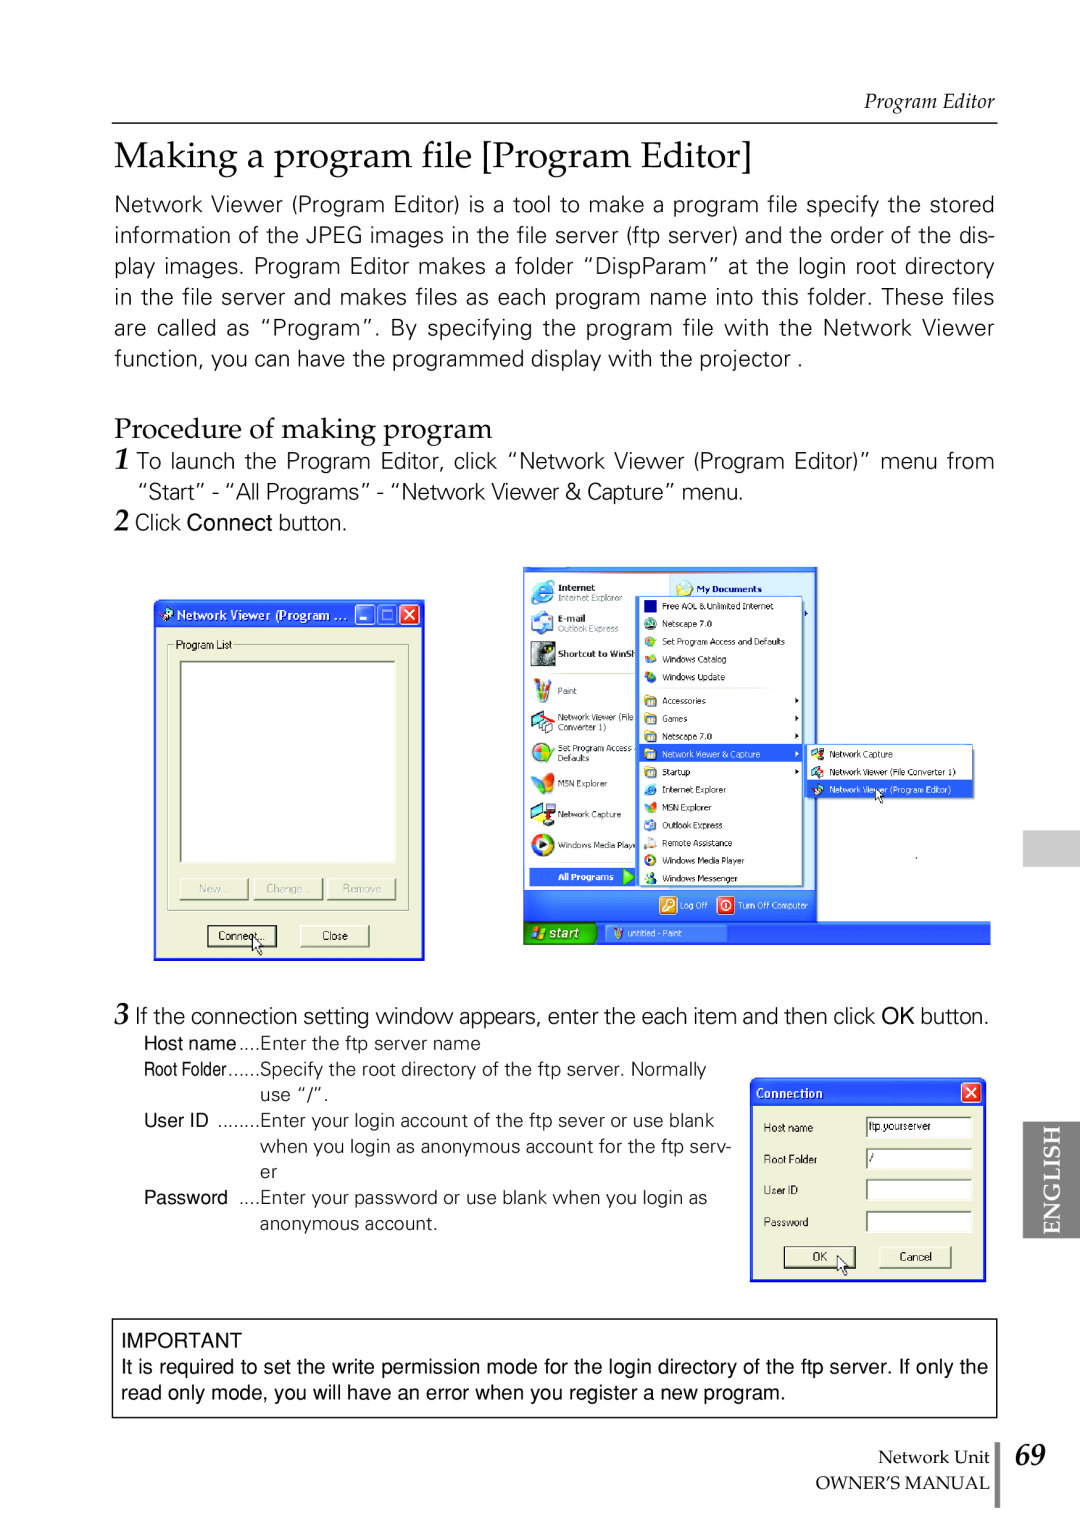 Eiki PjNET-20 owner manual Making a program file Program Editor, Procedure of making program, English 